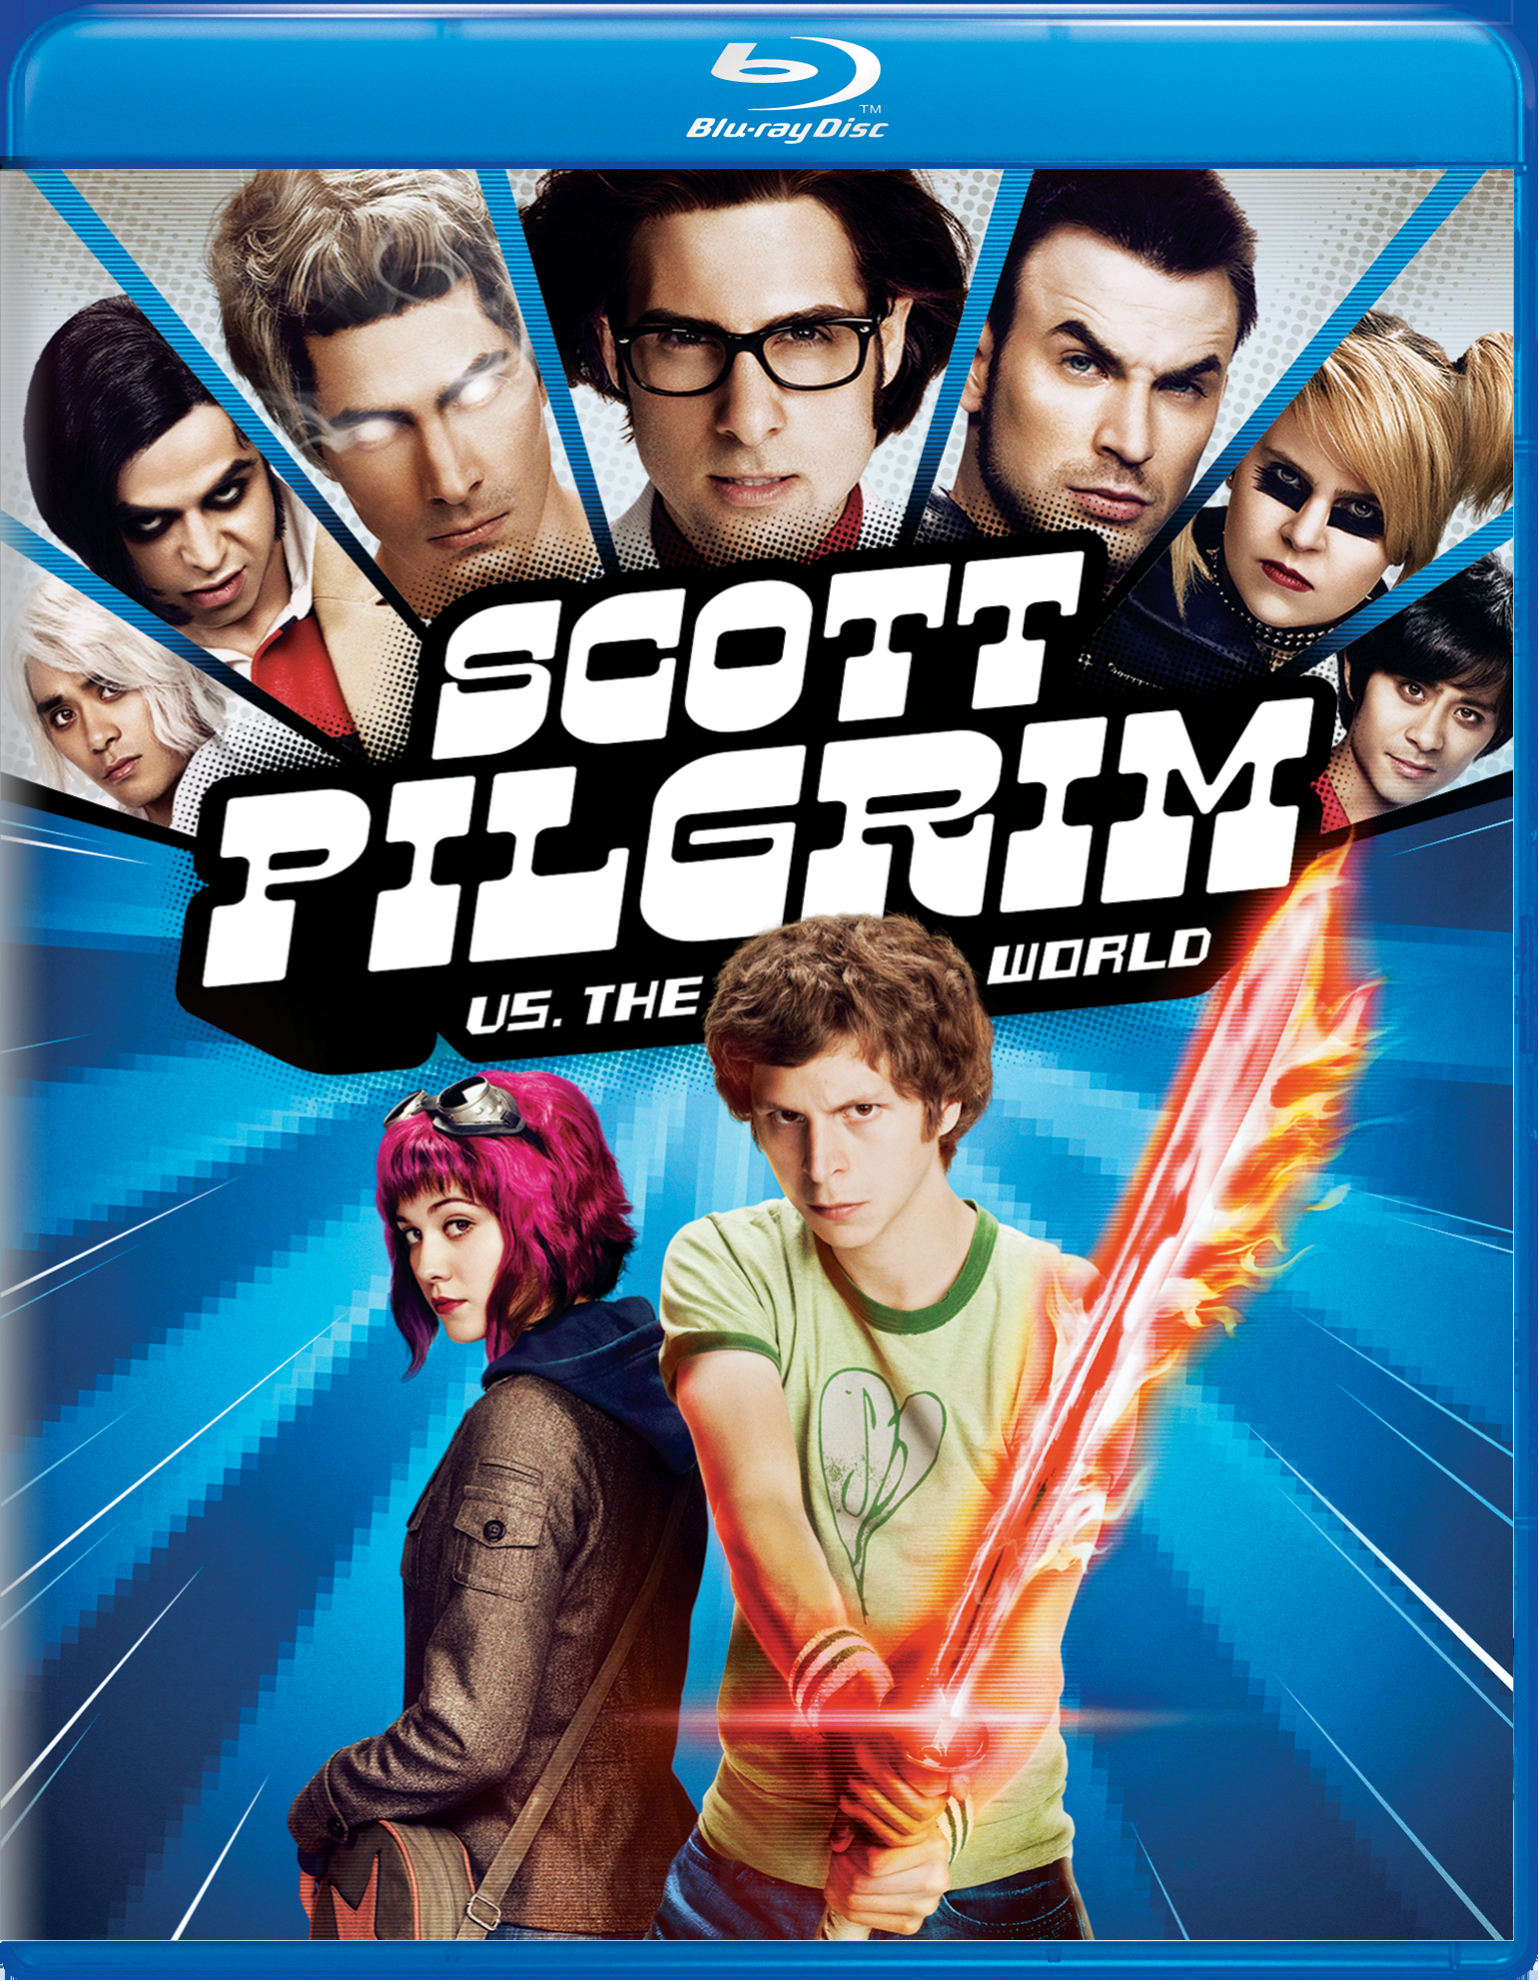 Scott Pilgrim Vs. The World (Blu-ray New Box Art) - Blu-ray [ 2010 ]  - Adventure Movies On Blu-ray - Movies On GRUV